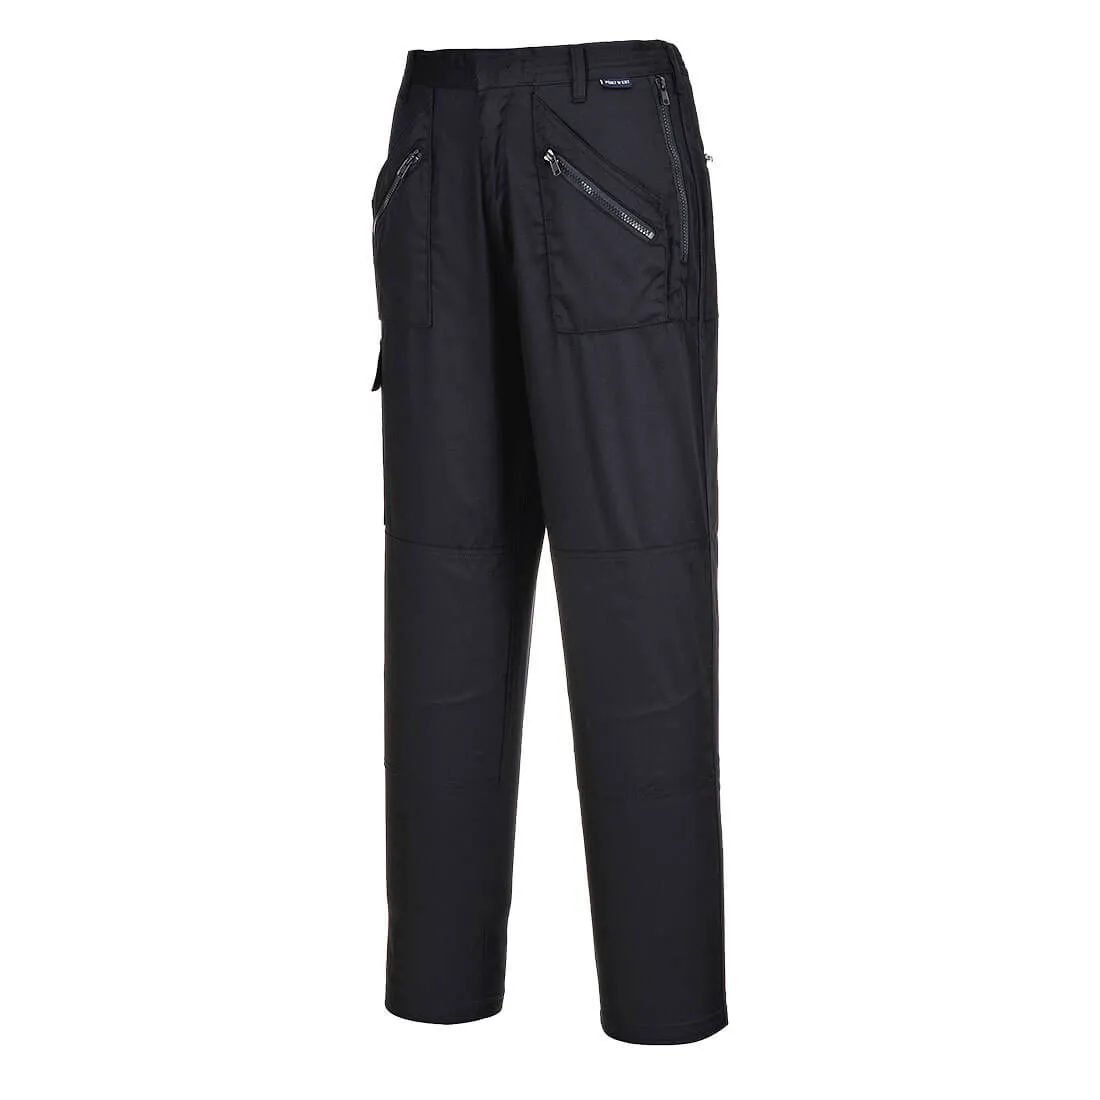 Portwest Ladies S687 Action Trousers - Black, Extra Large, 33"